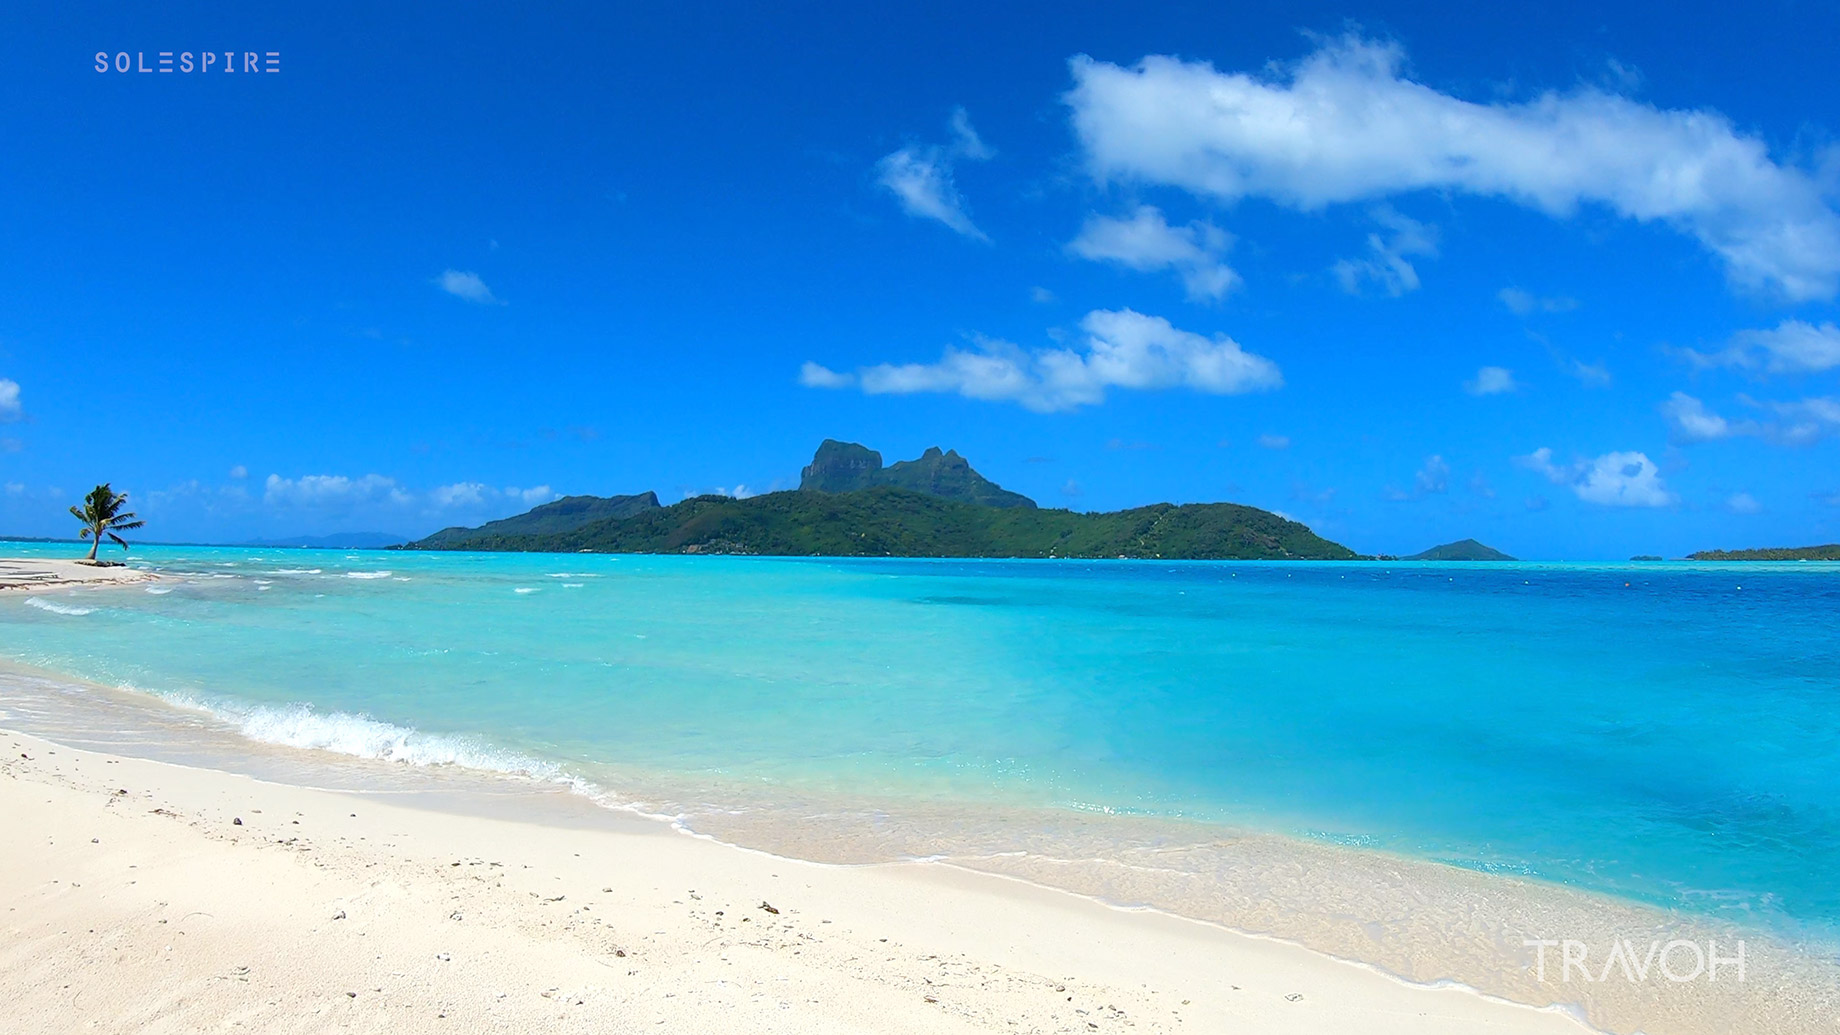 Beach Walk - Calm Tropical Sea Sounds - Motu Tane Island, Bora Bora, French Polynesia - 4K Travel Video